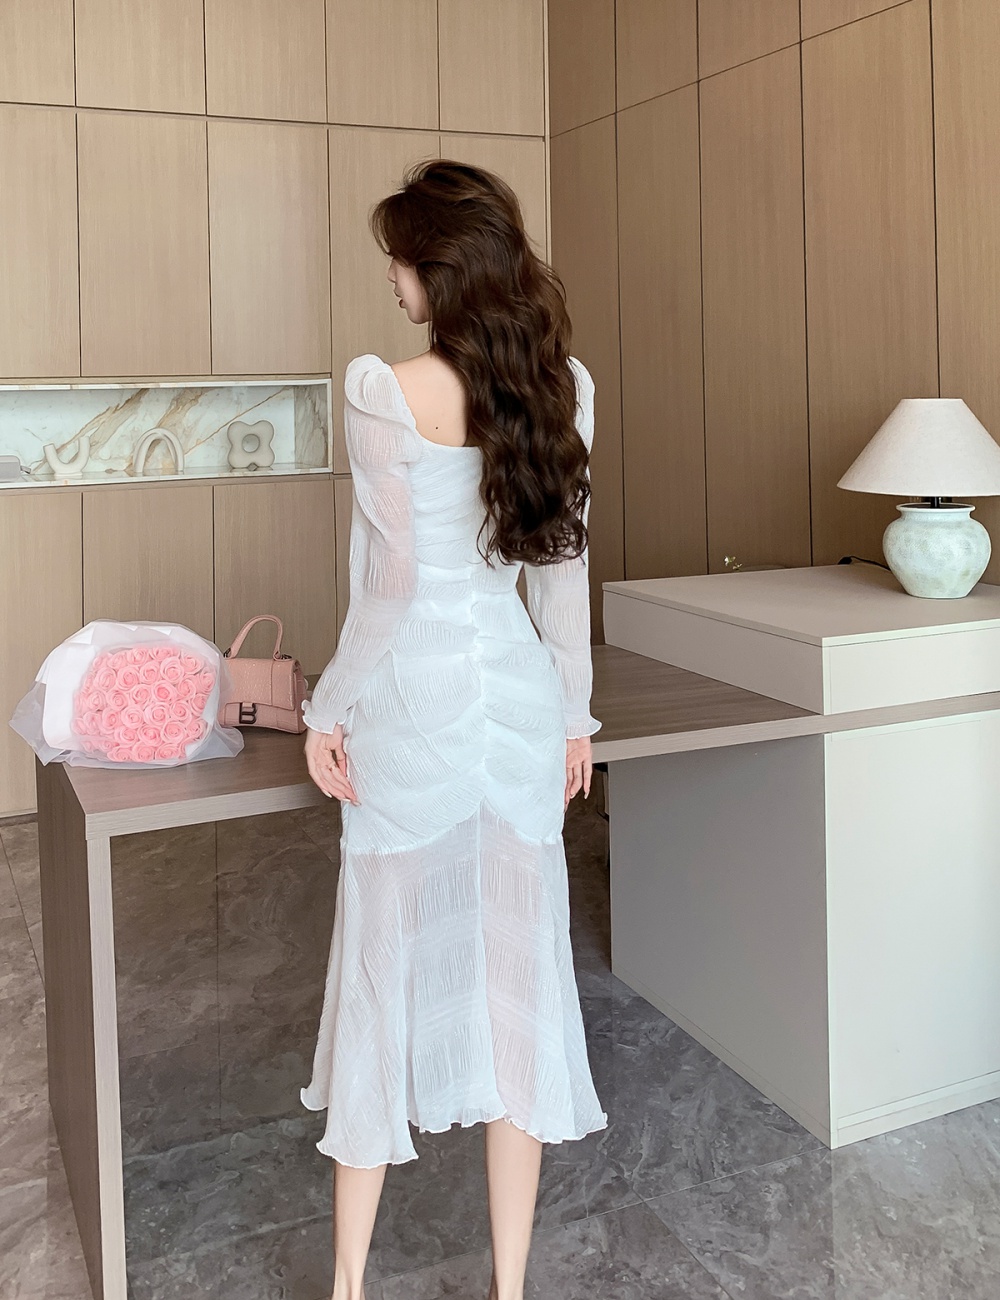 Long sleeve vacation liangsi dress white slim long dress